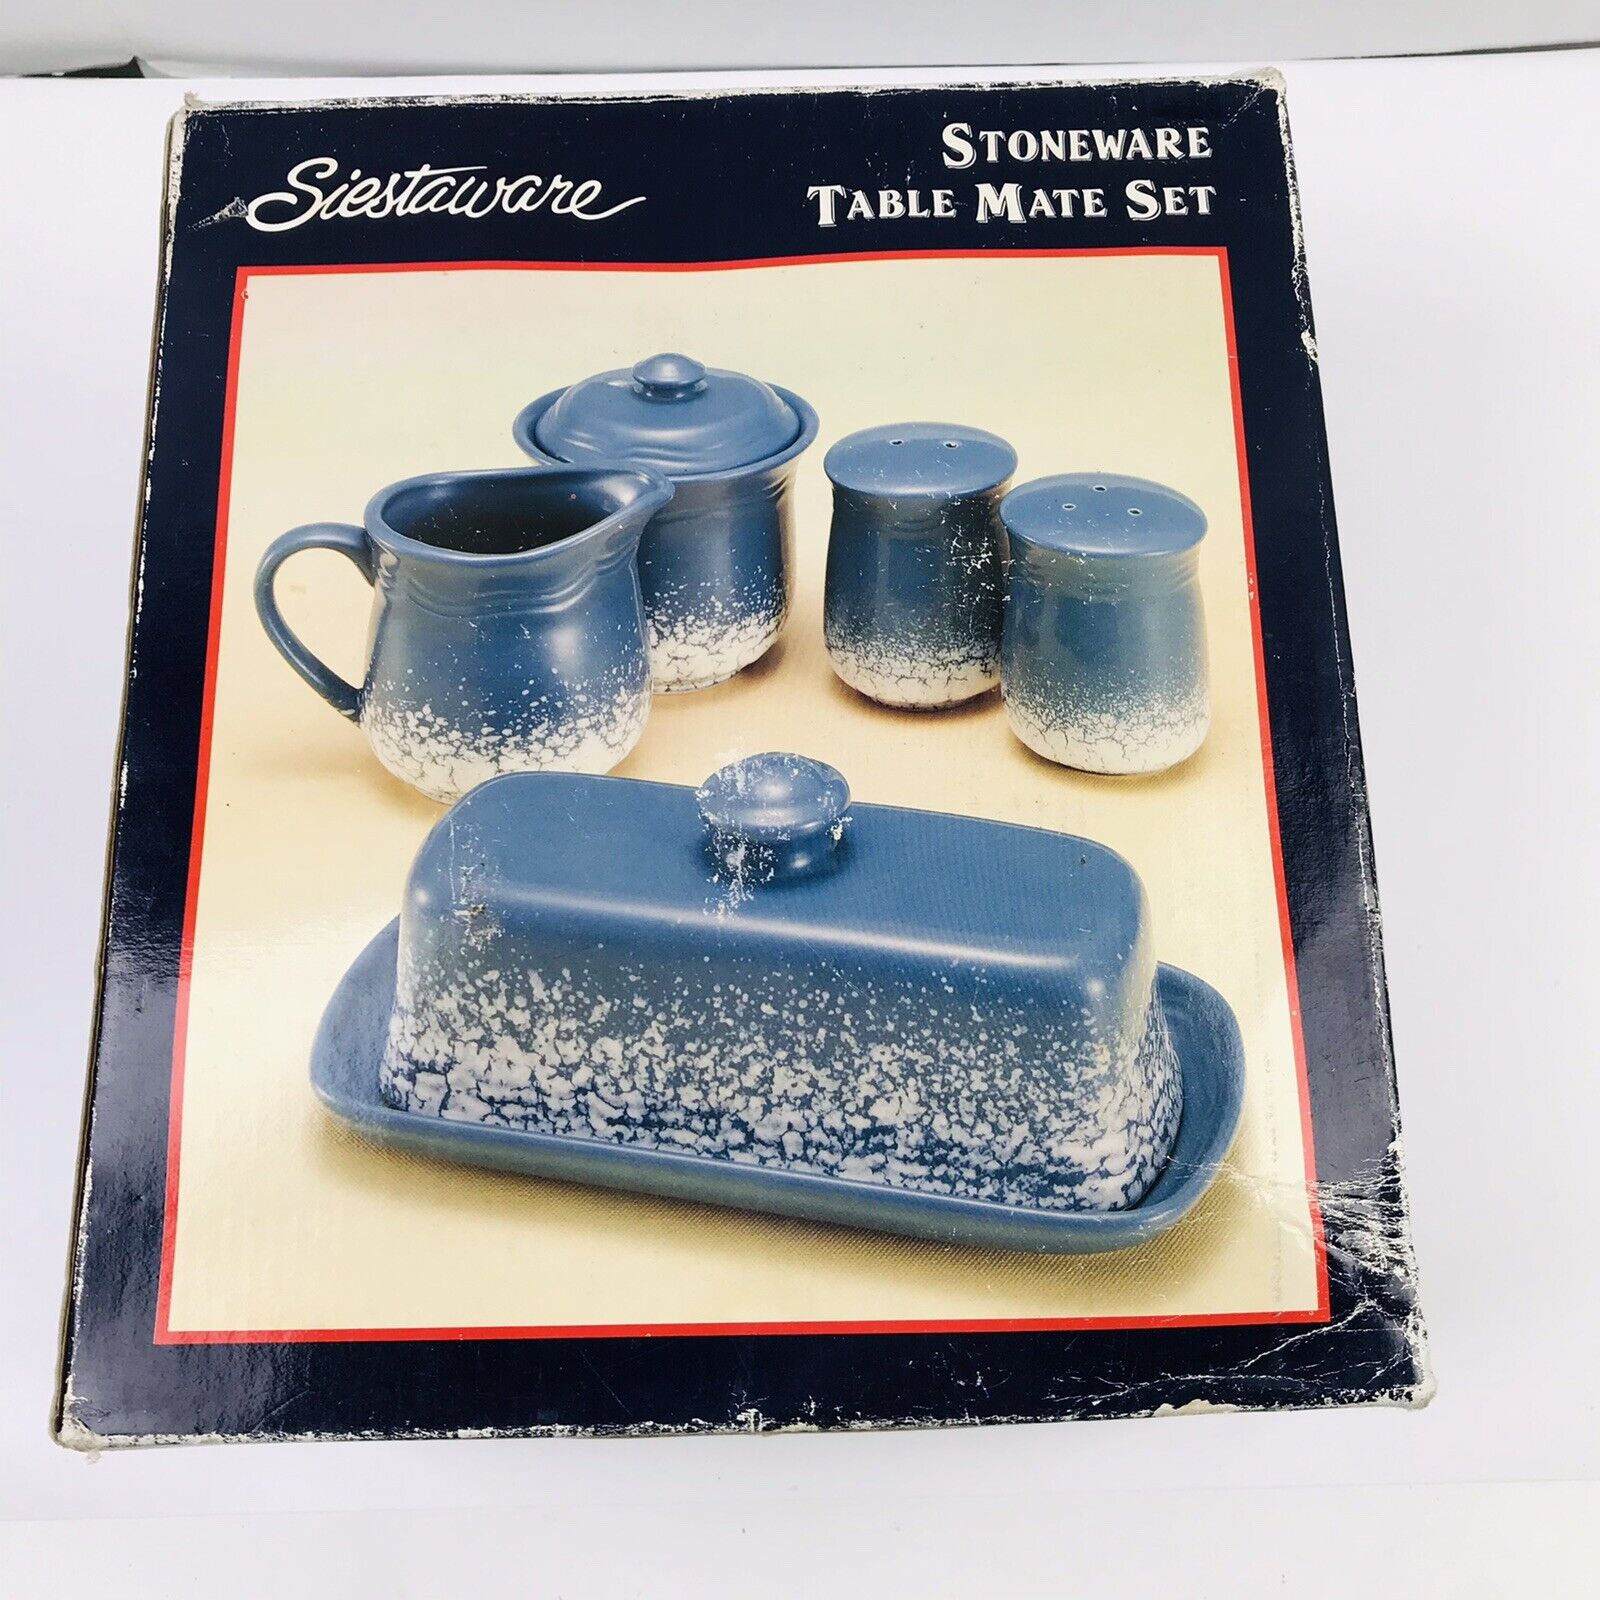 Vintage Siestaware Stoneware 5 Piece Table Mate Set Blue Flocked Set NOS